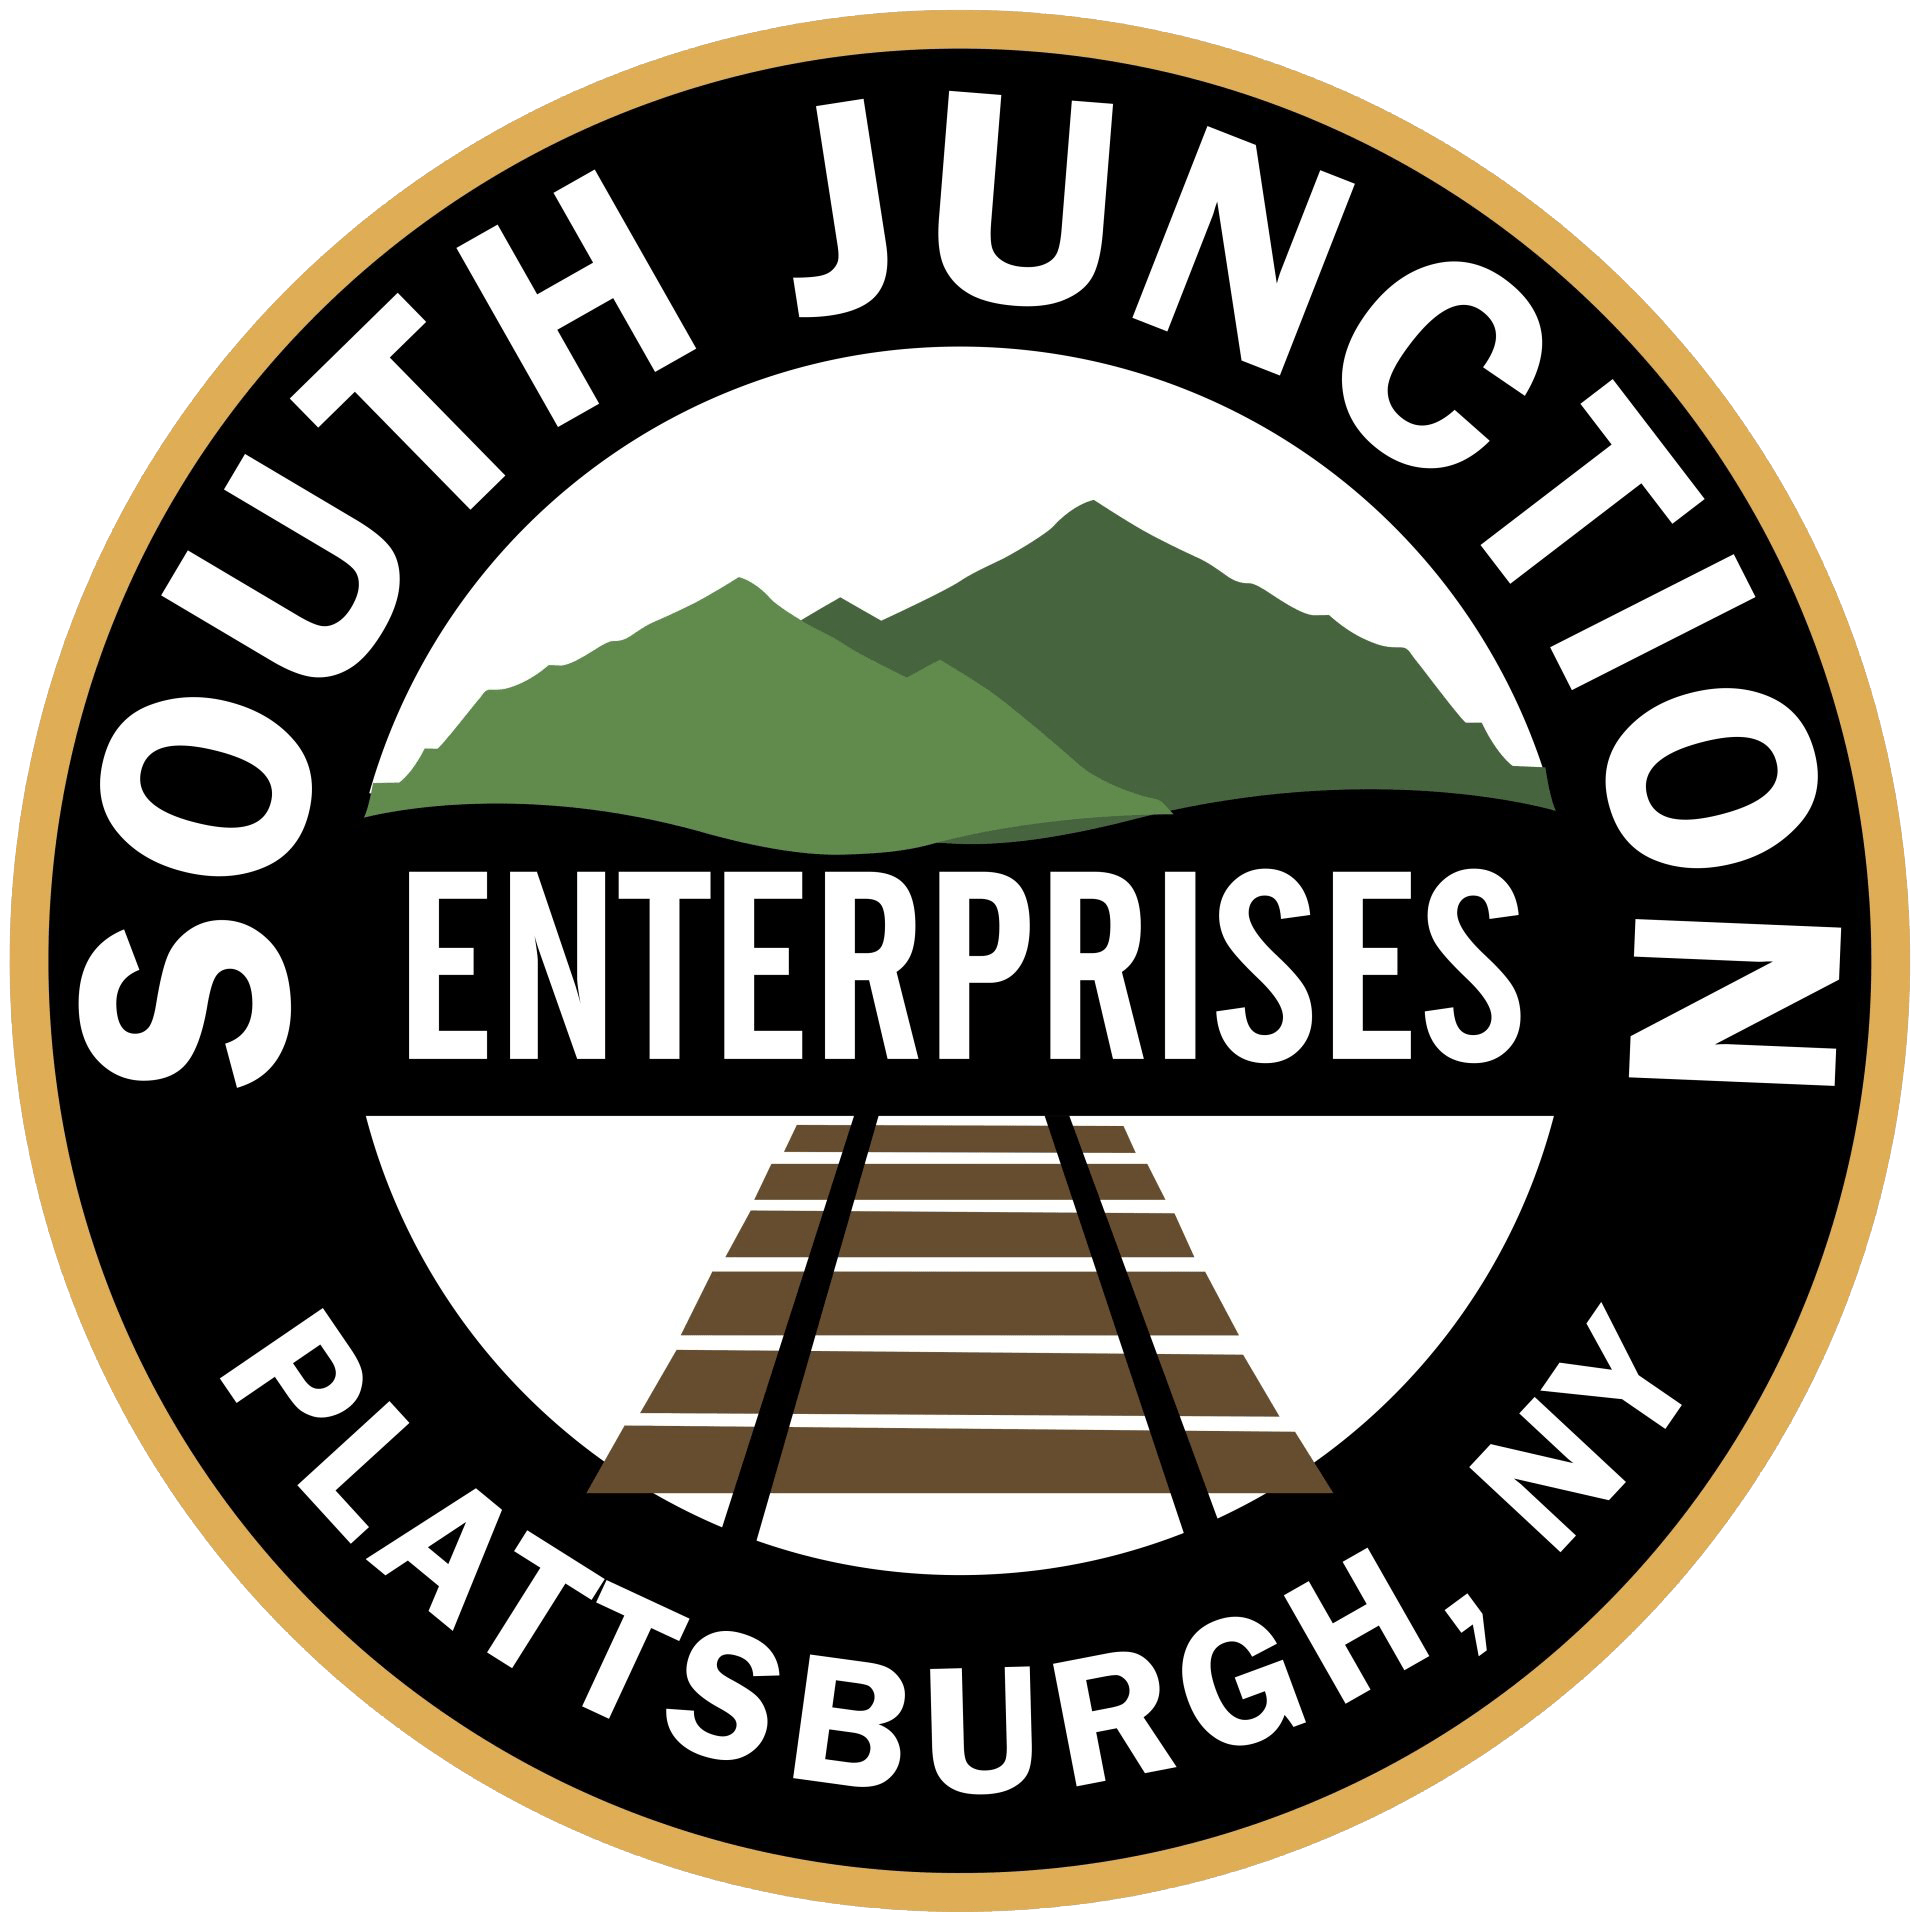 South Junction Enterprises | Logo